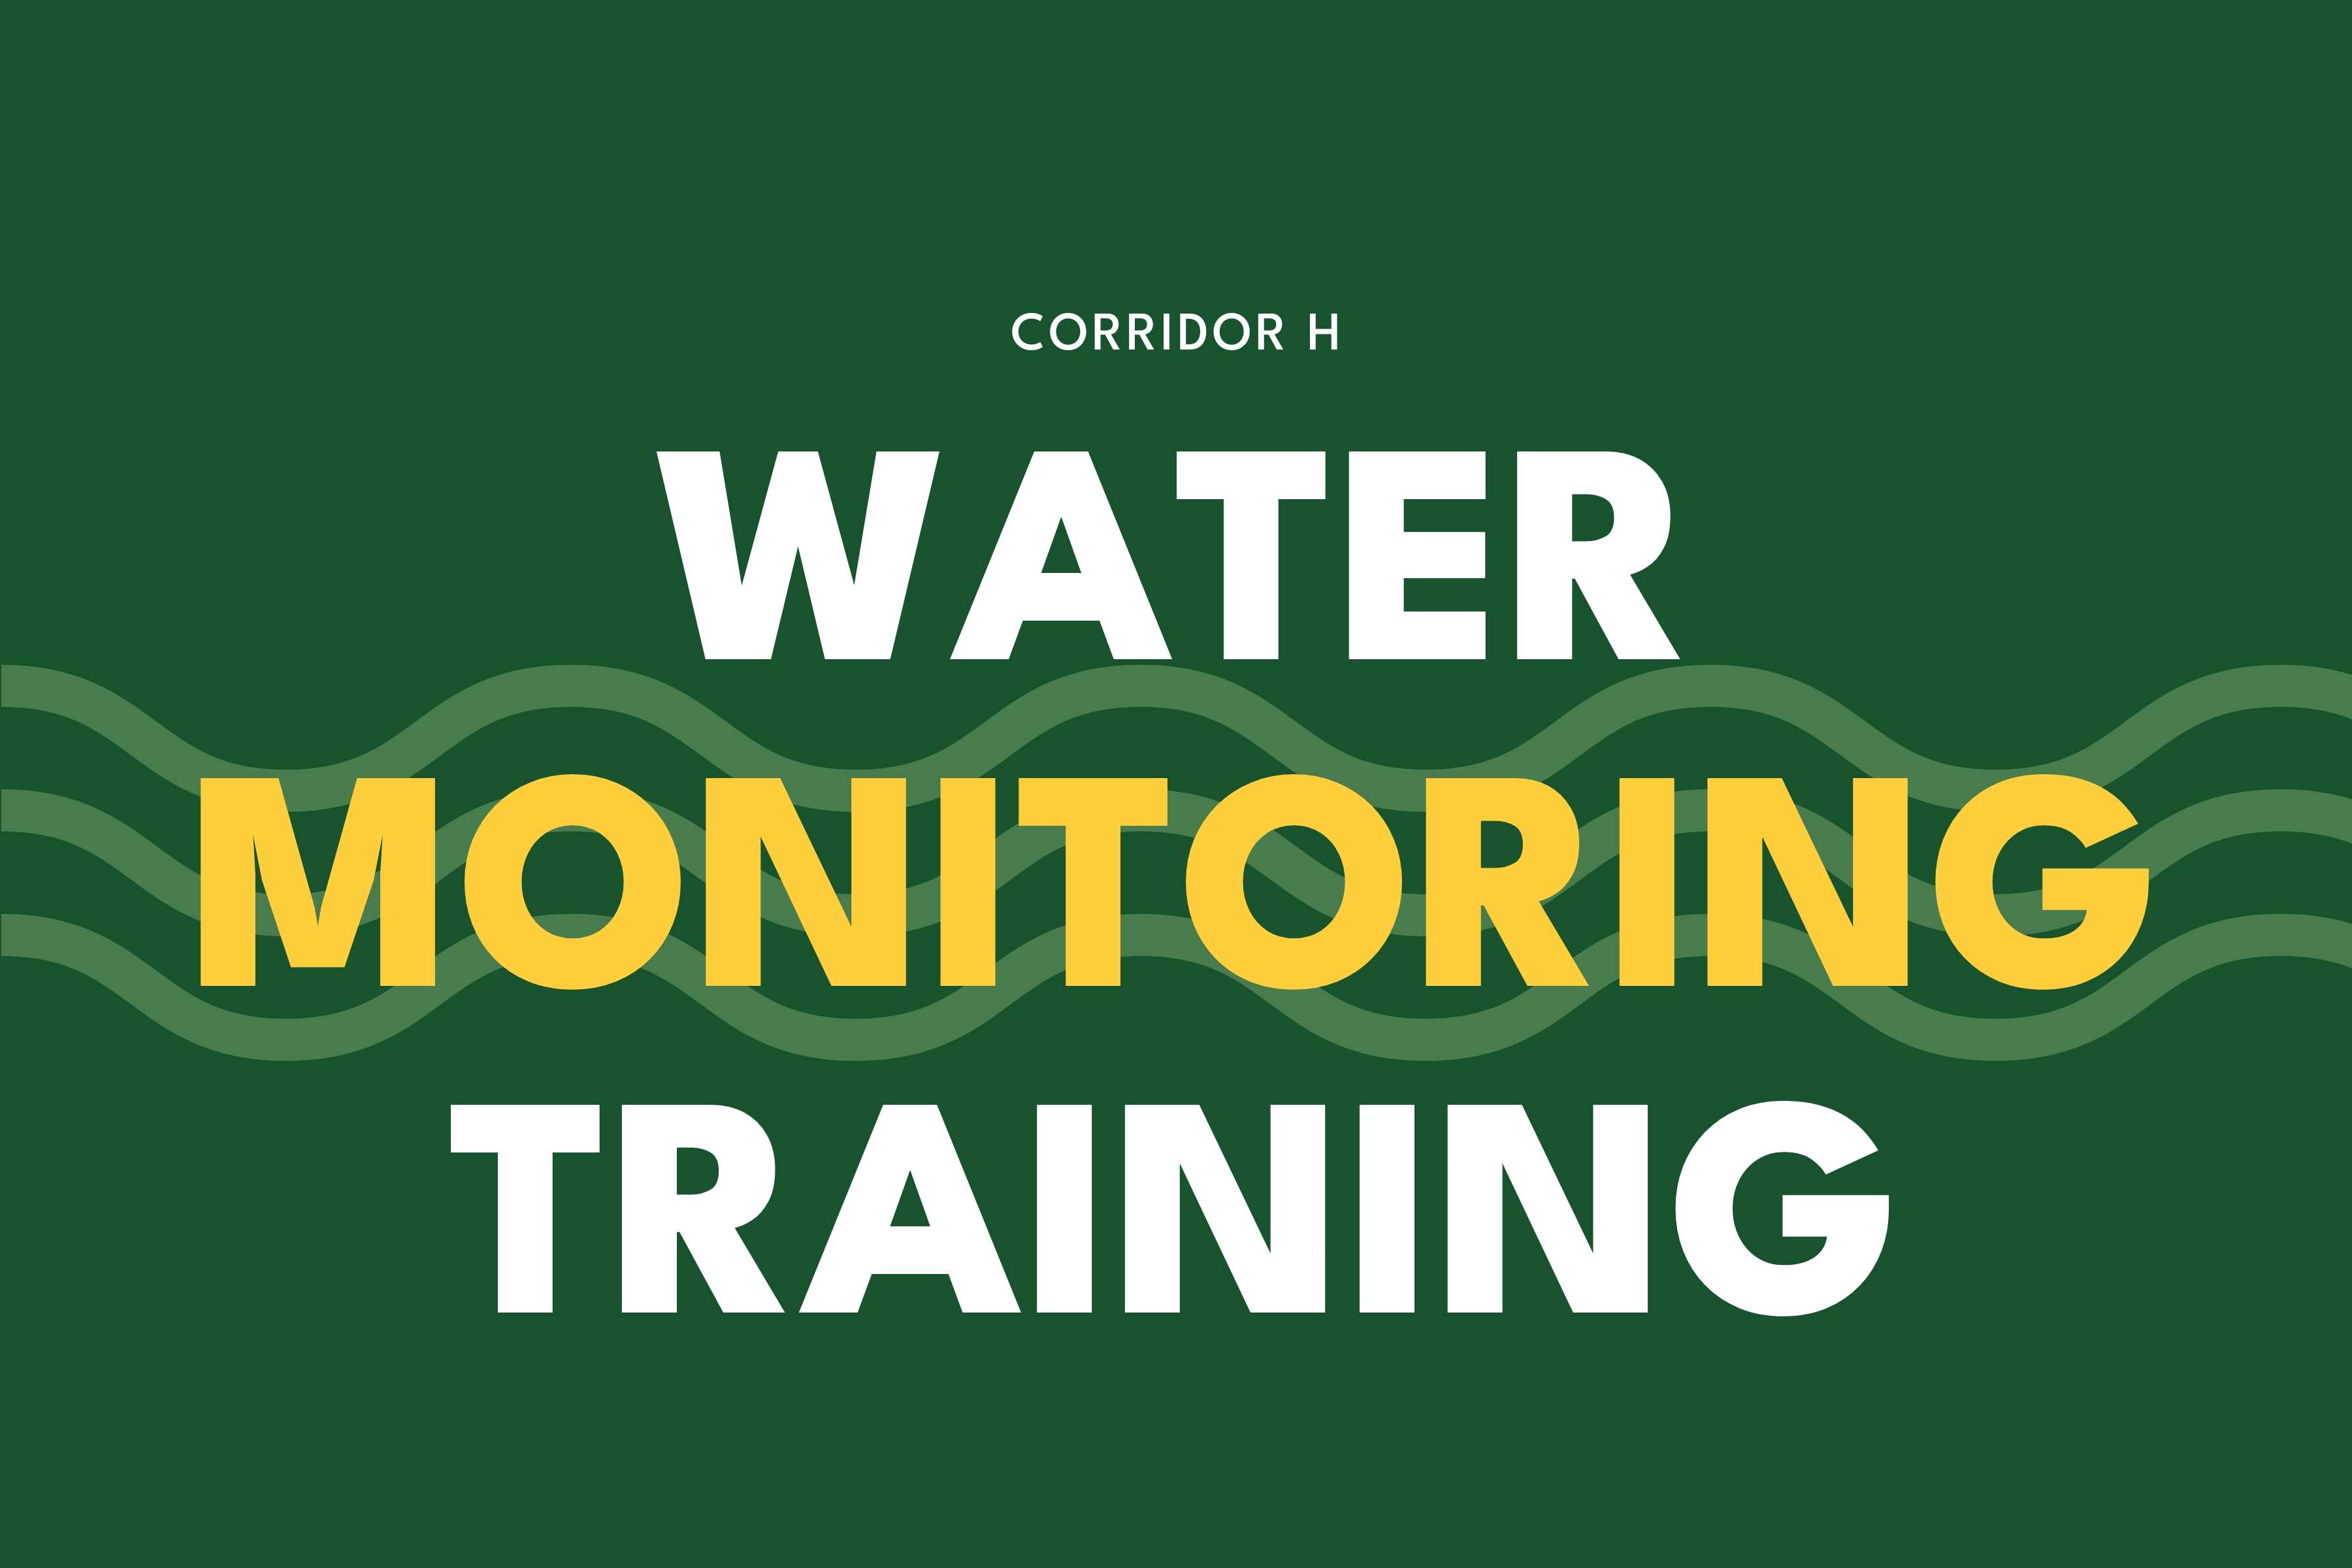 Corridor H Water Monitoring Training